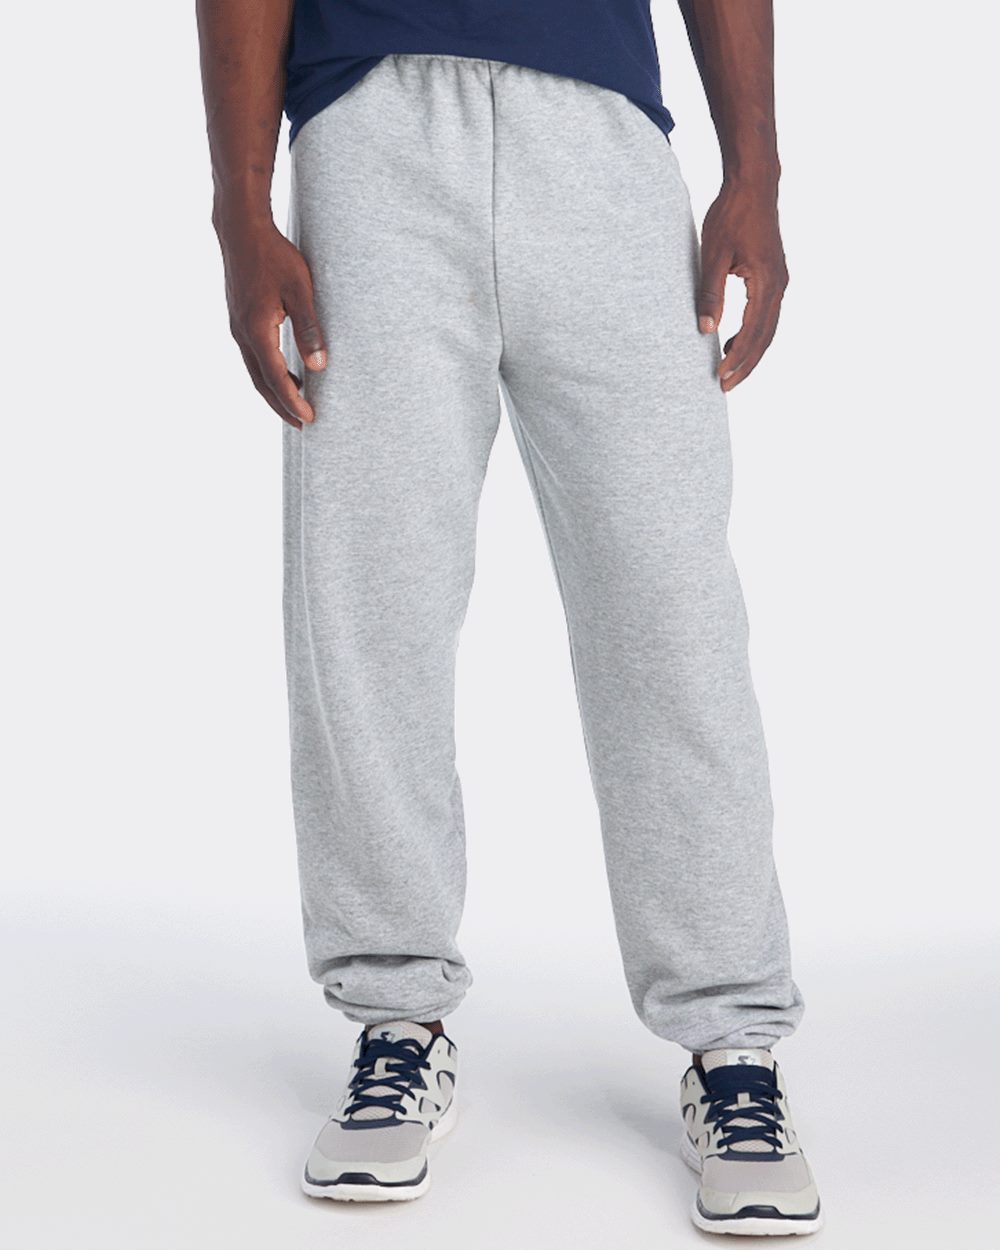 Jerzees brand plain black mens tracksuit jogging training pants sweatpants